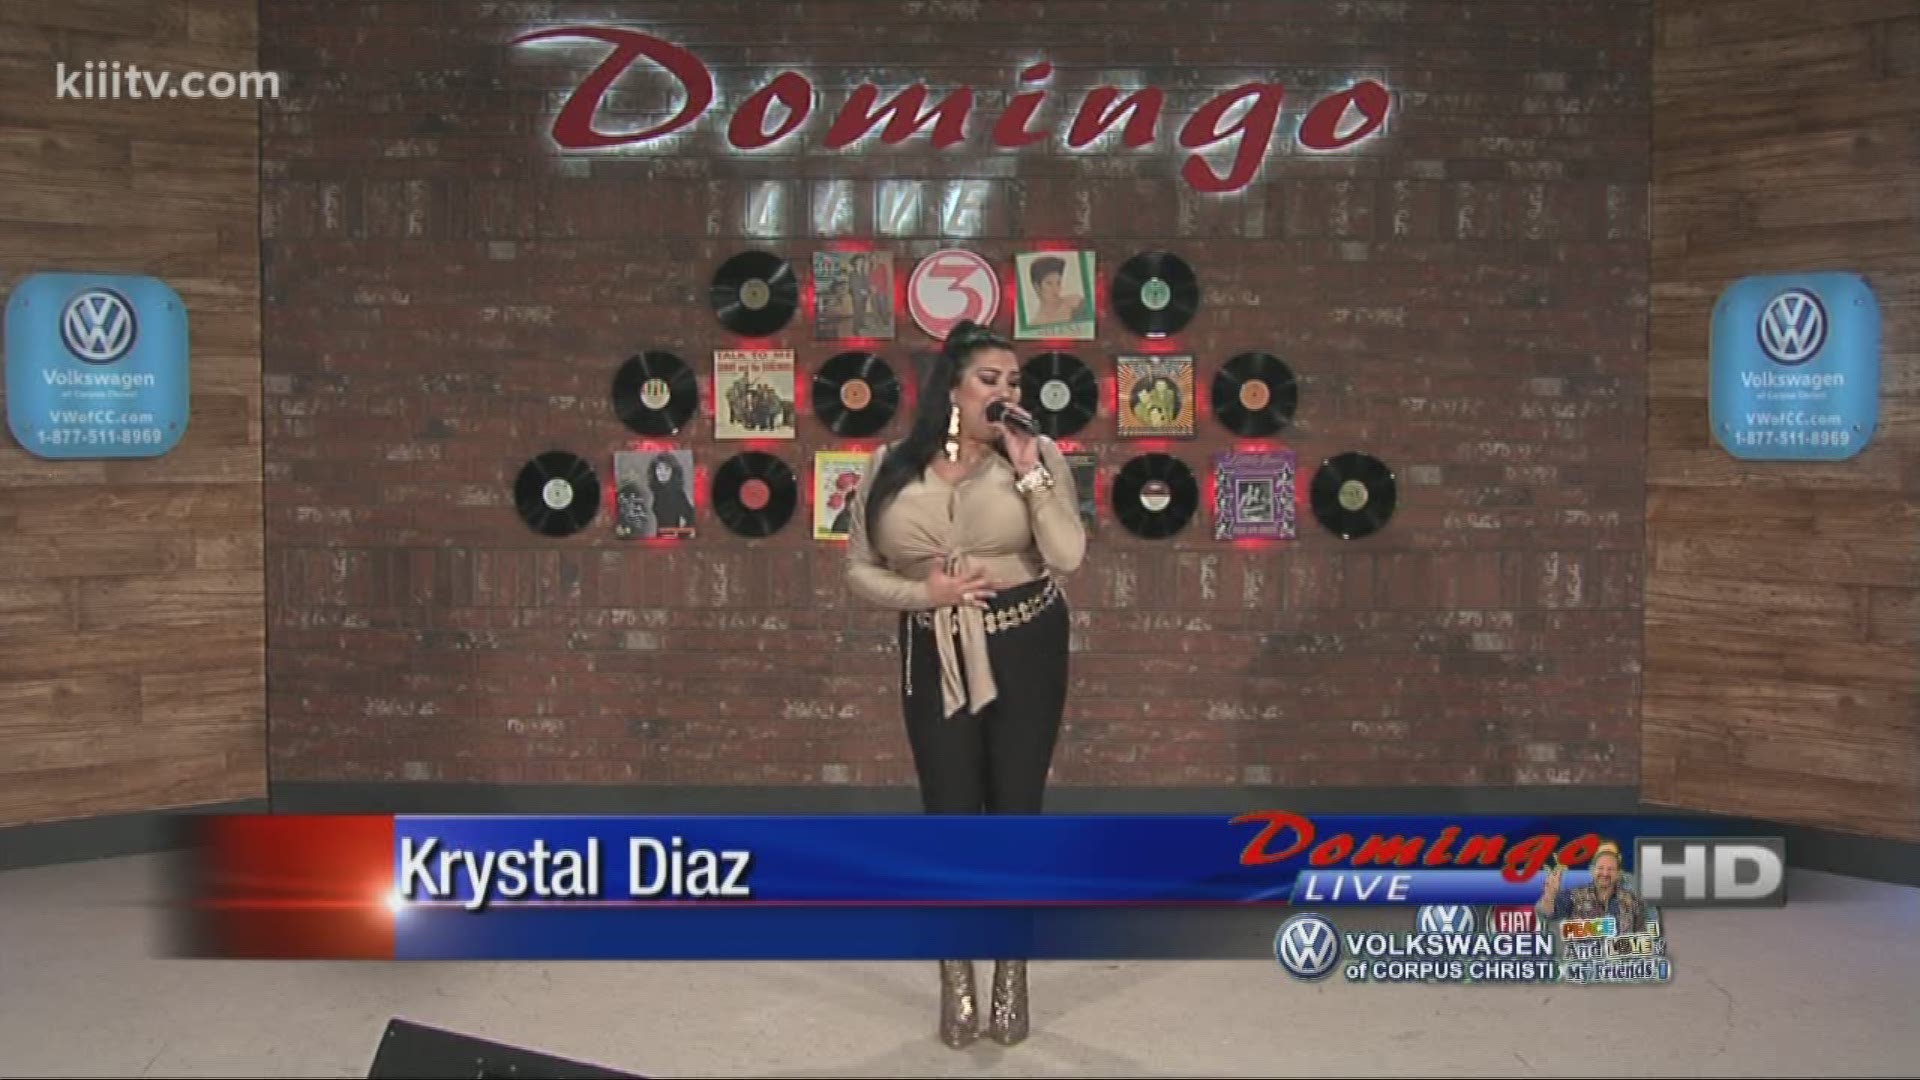 Krystal Diaz performing "Adios Hasta Nunca" on Domingo Live.